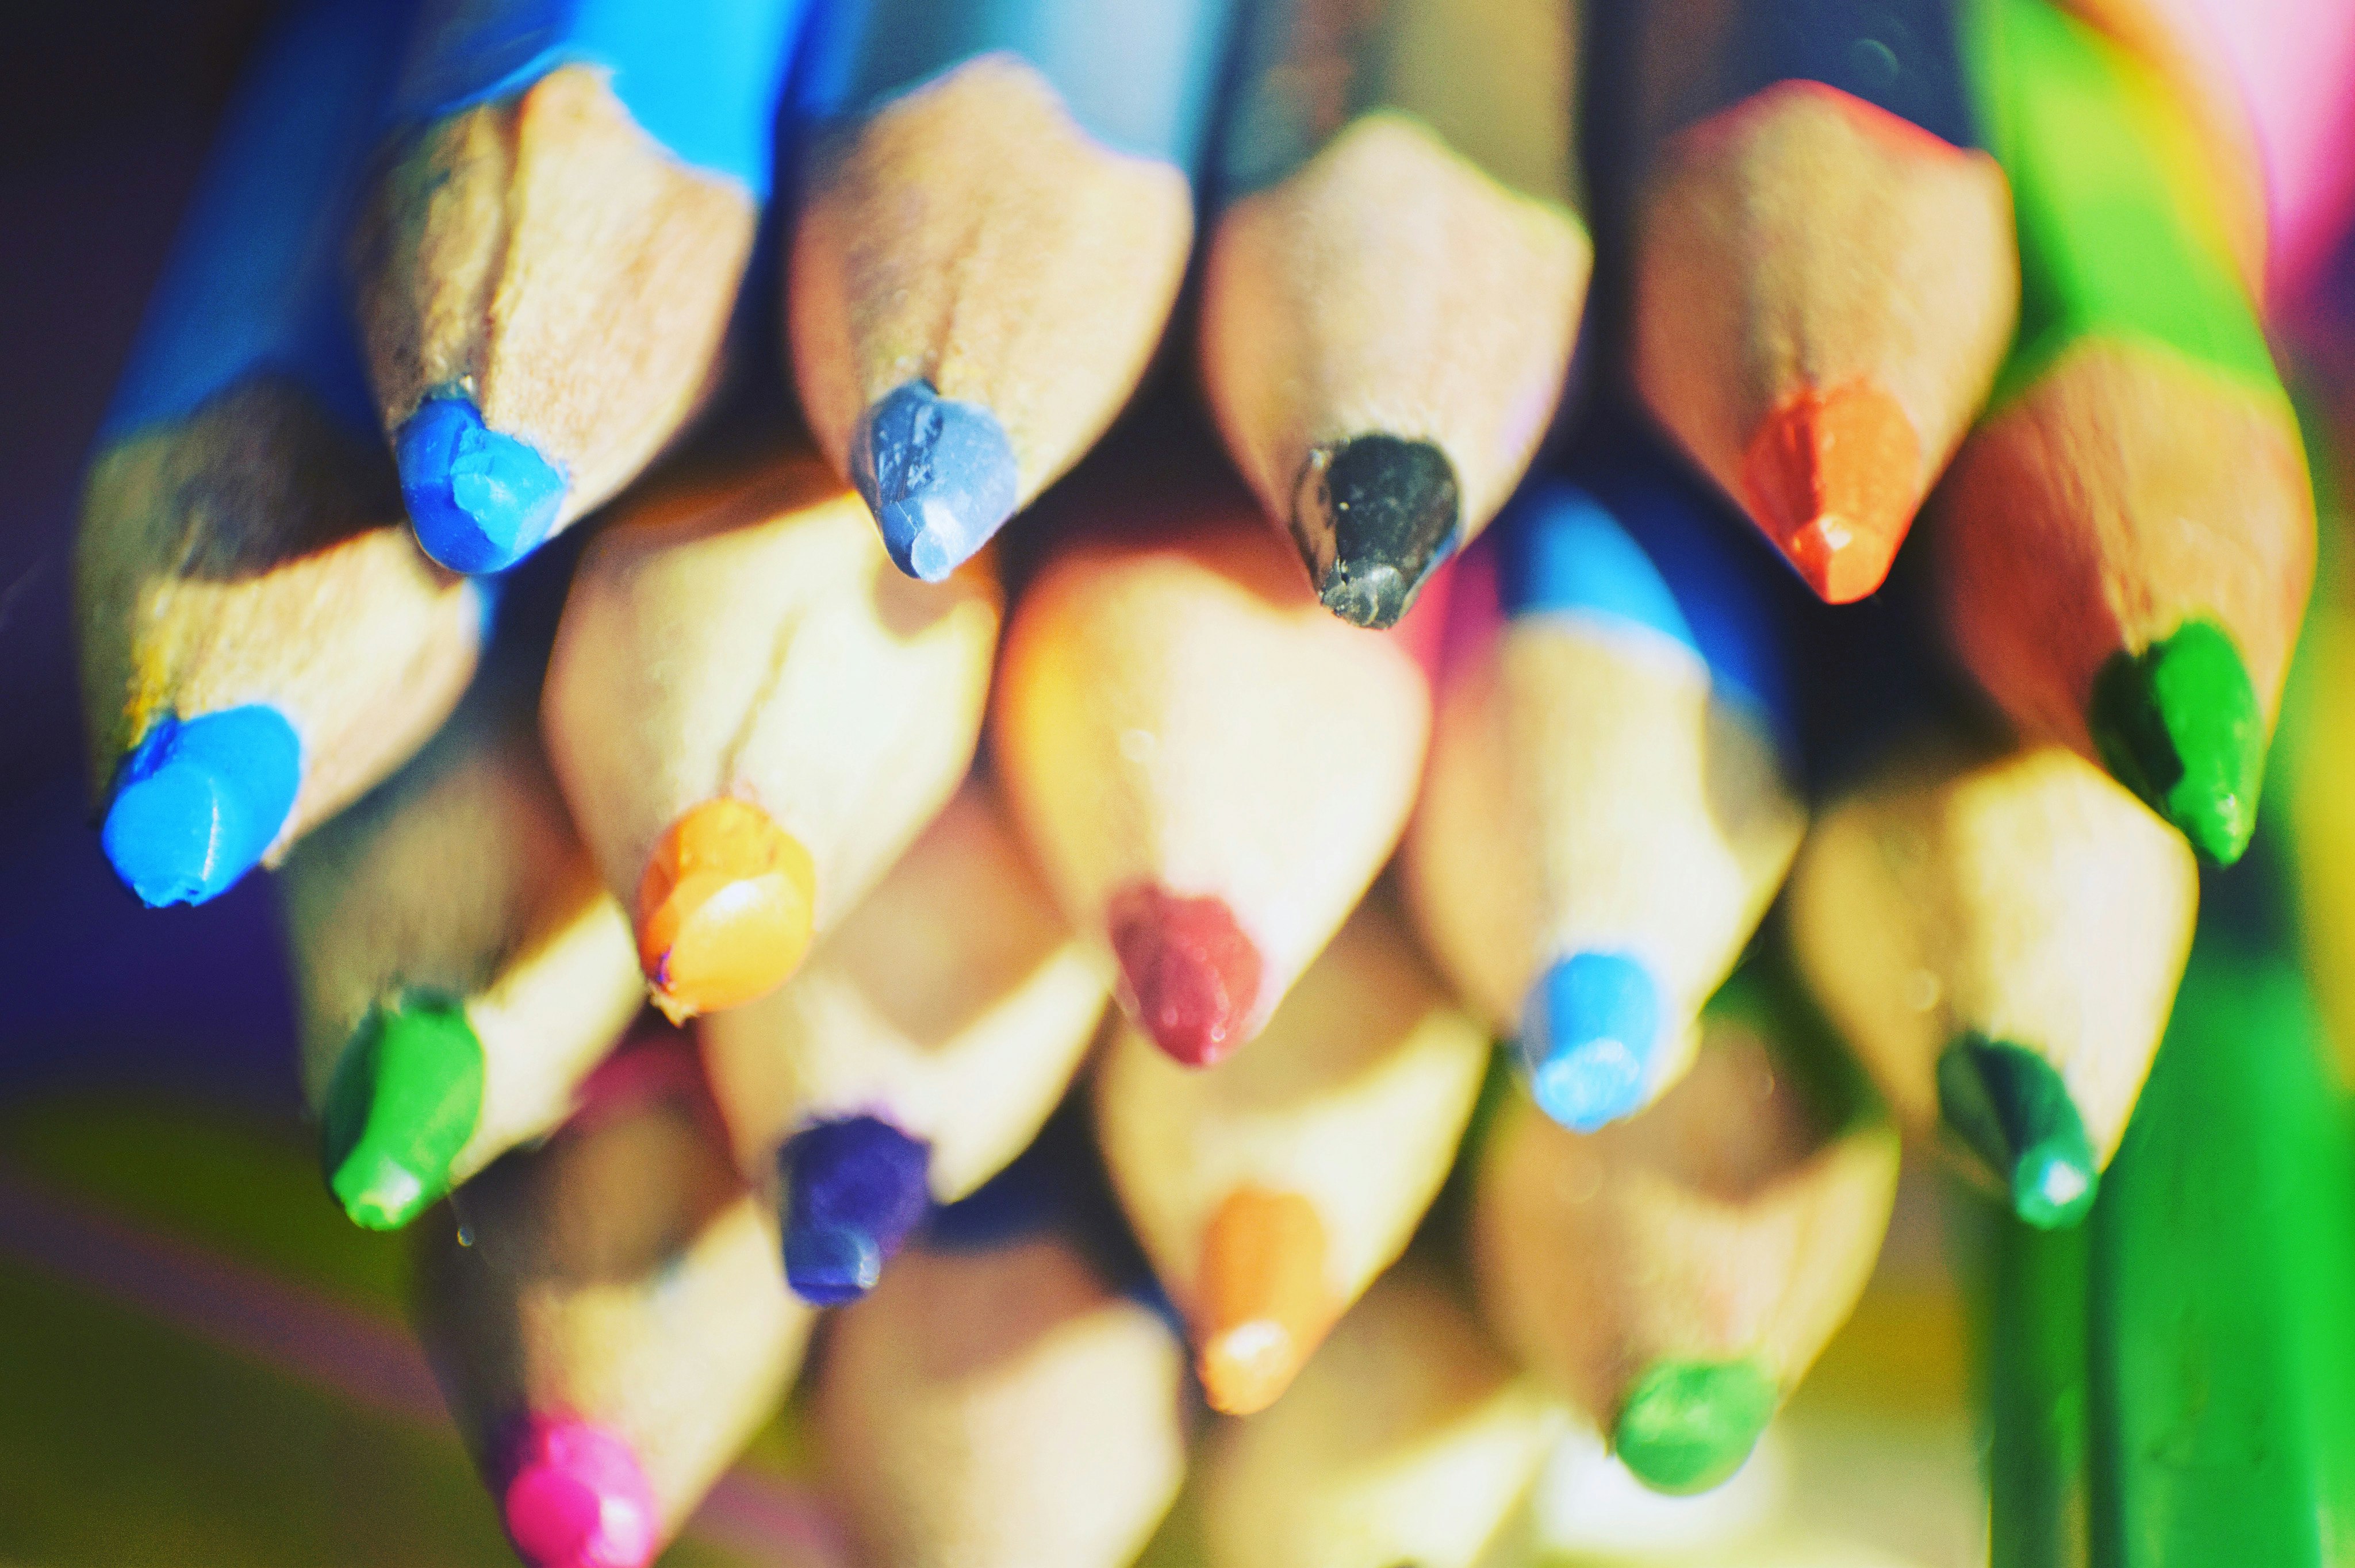 close up photo of color pencils